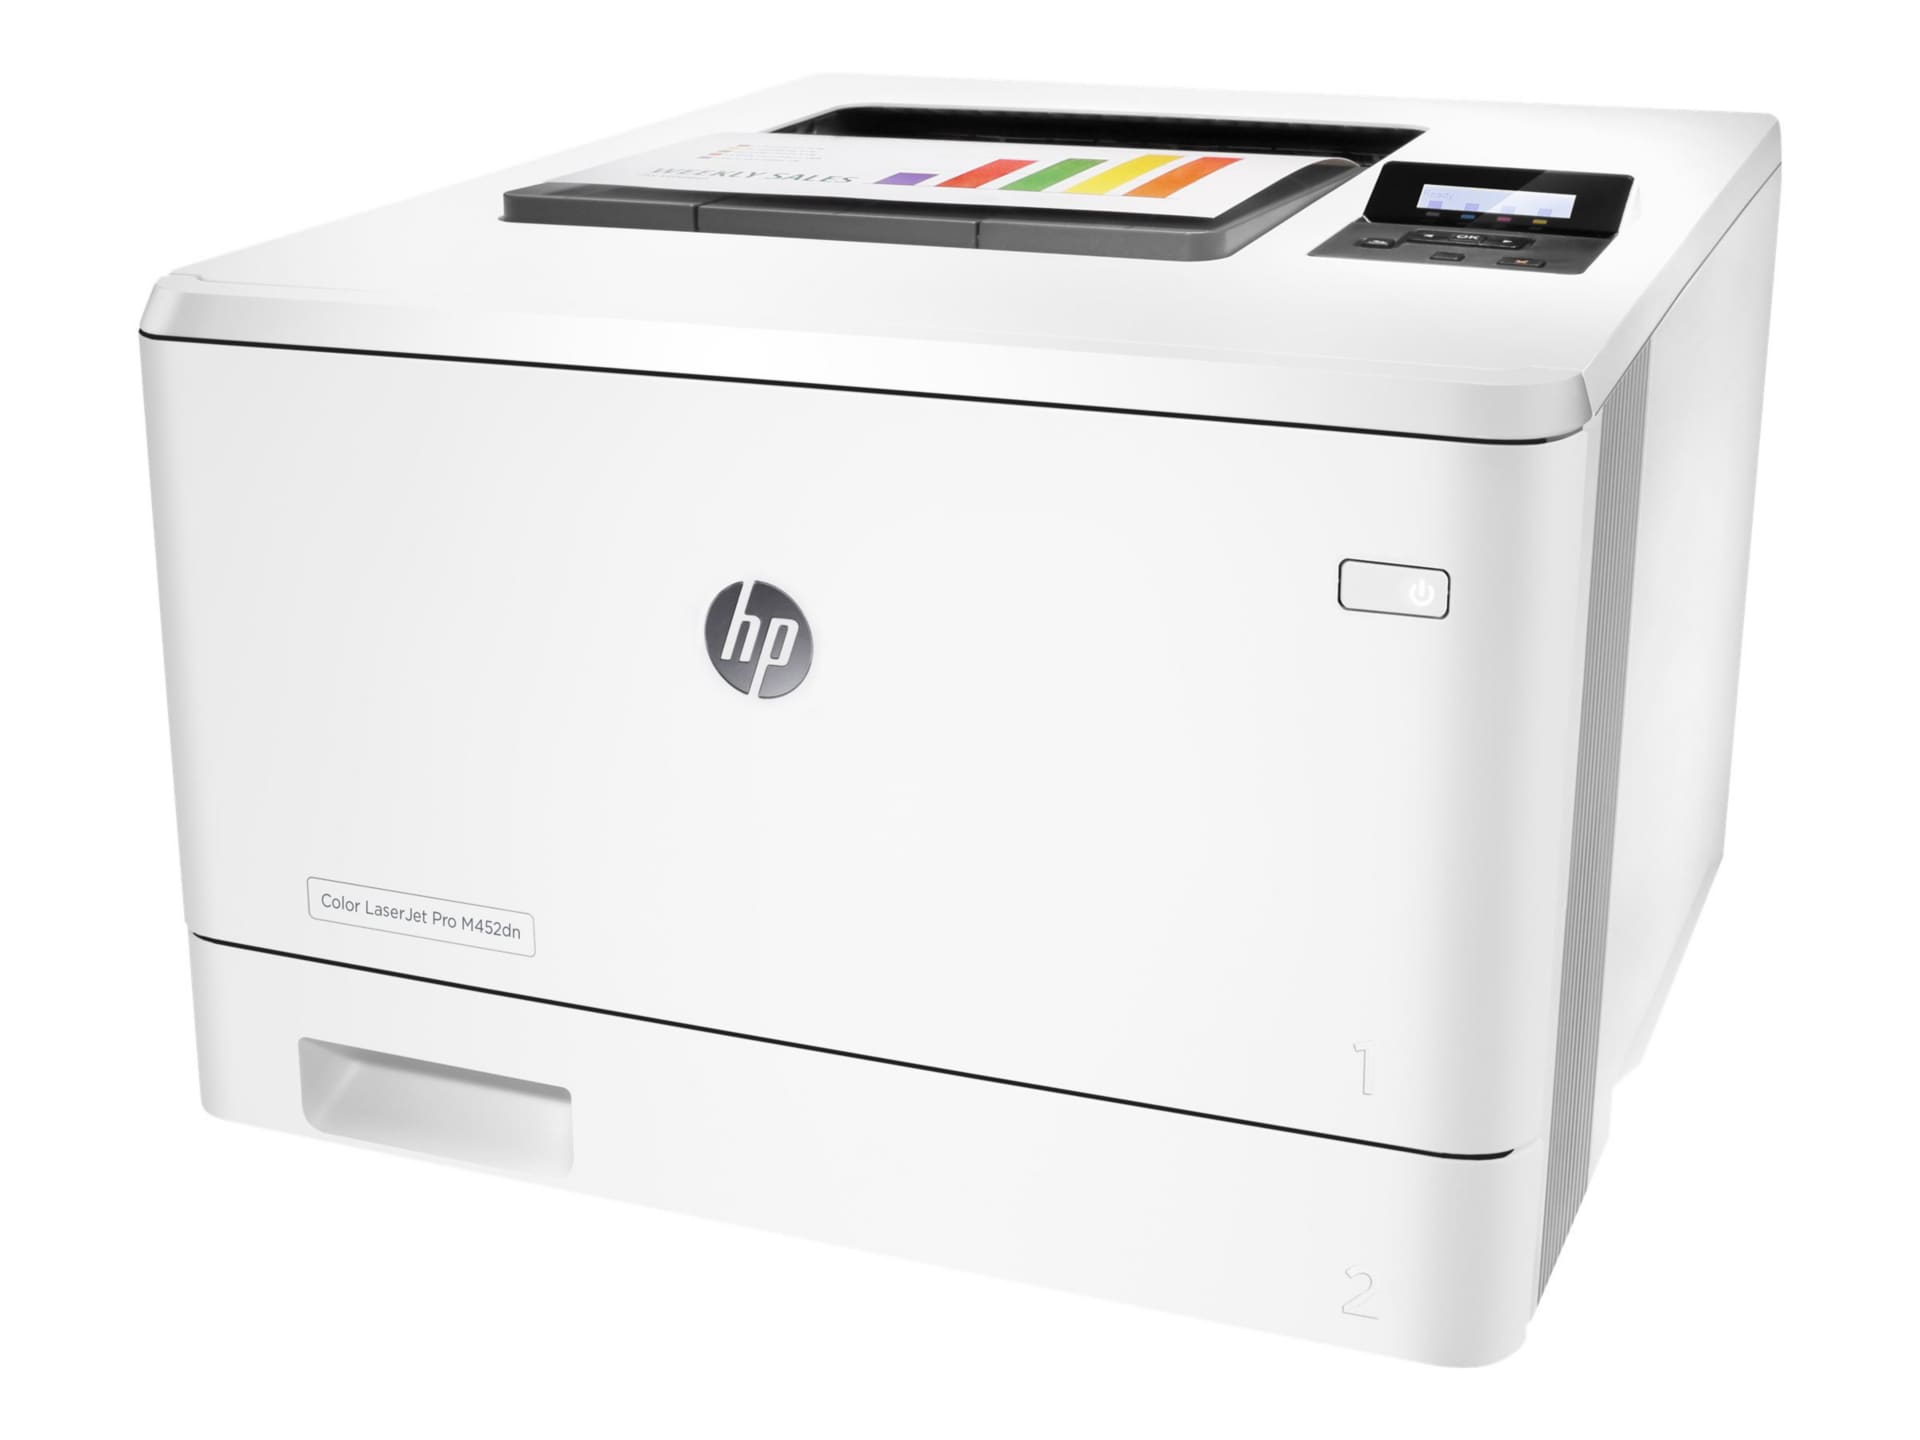 HP Color LaserJet Pro M452dn ($449-$200 savings=$249, Ends 11/30)